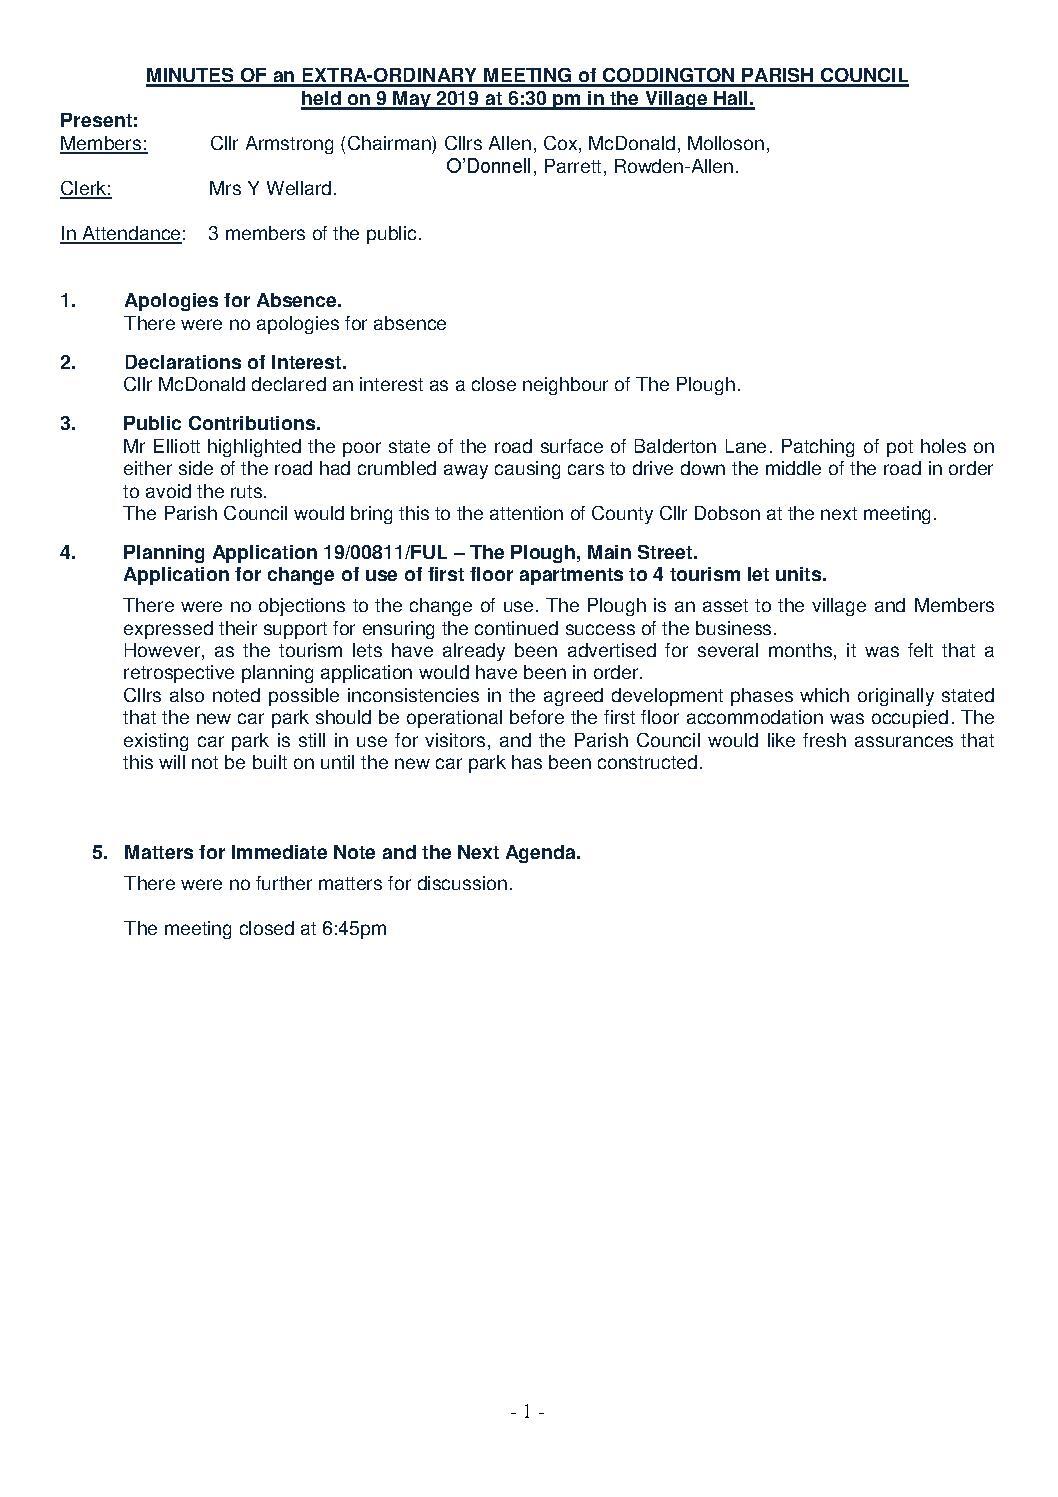 Extra-ordinary Parish Council Meeting 9 May 2019 Minutes